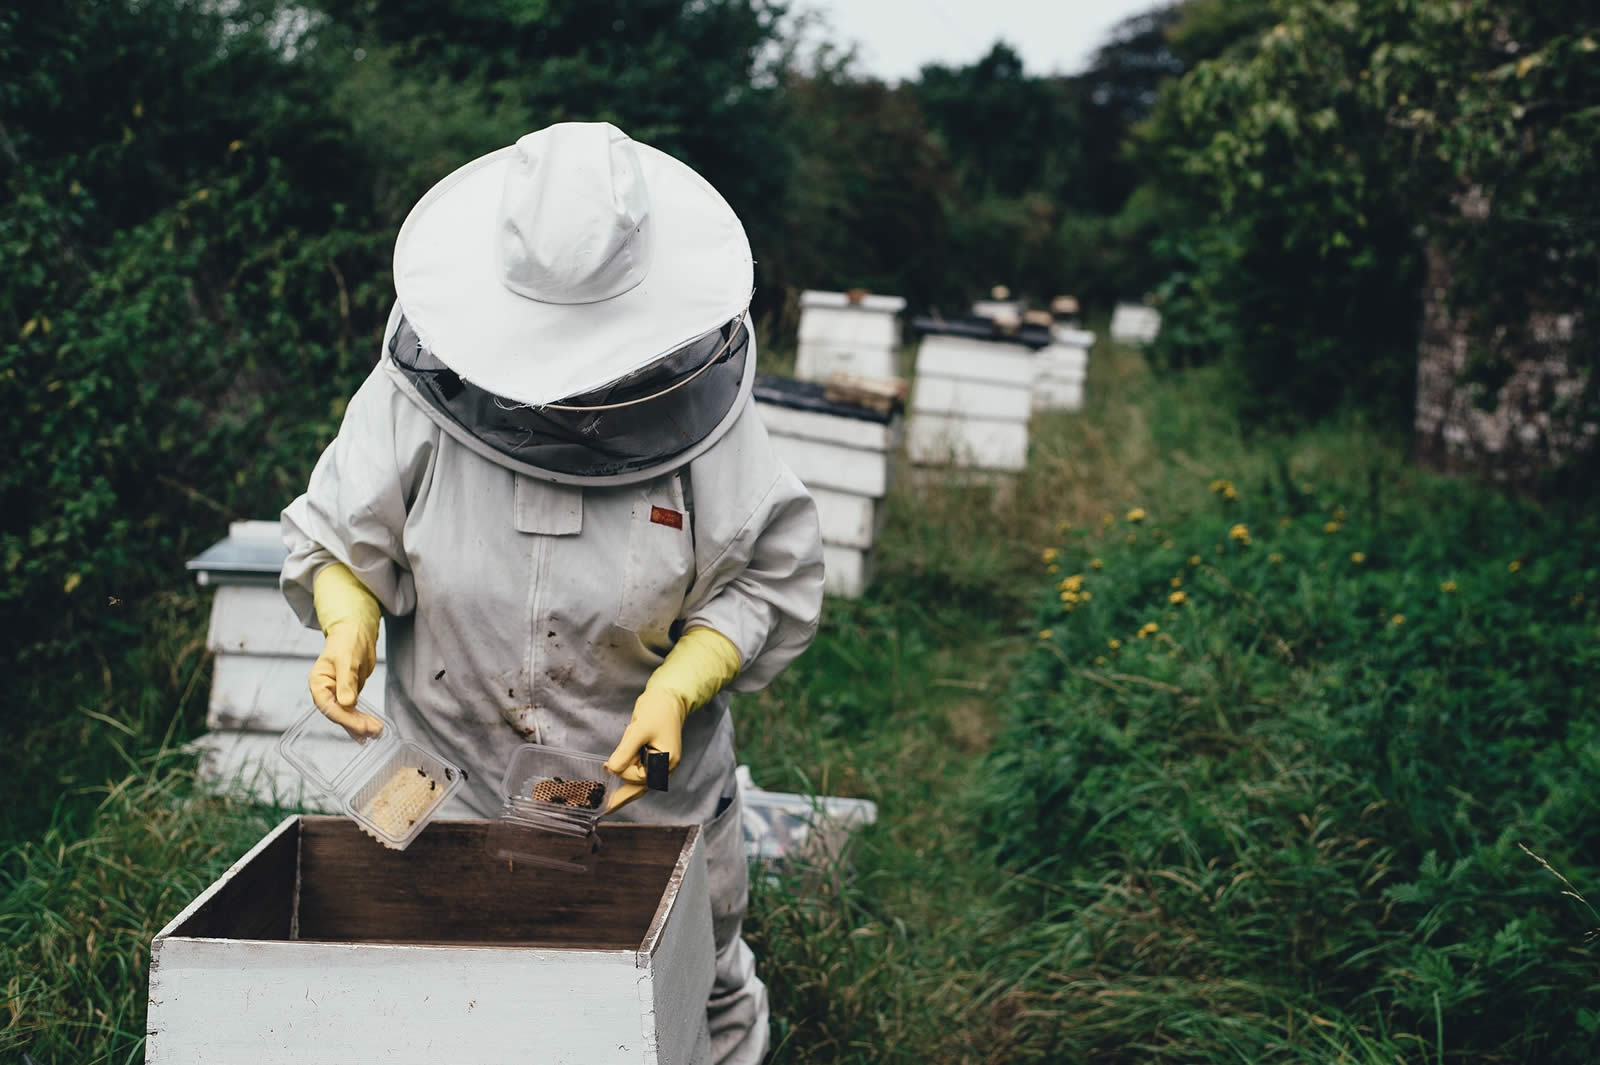 beekeeper gathering fresh honey.